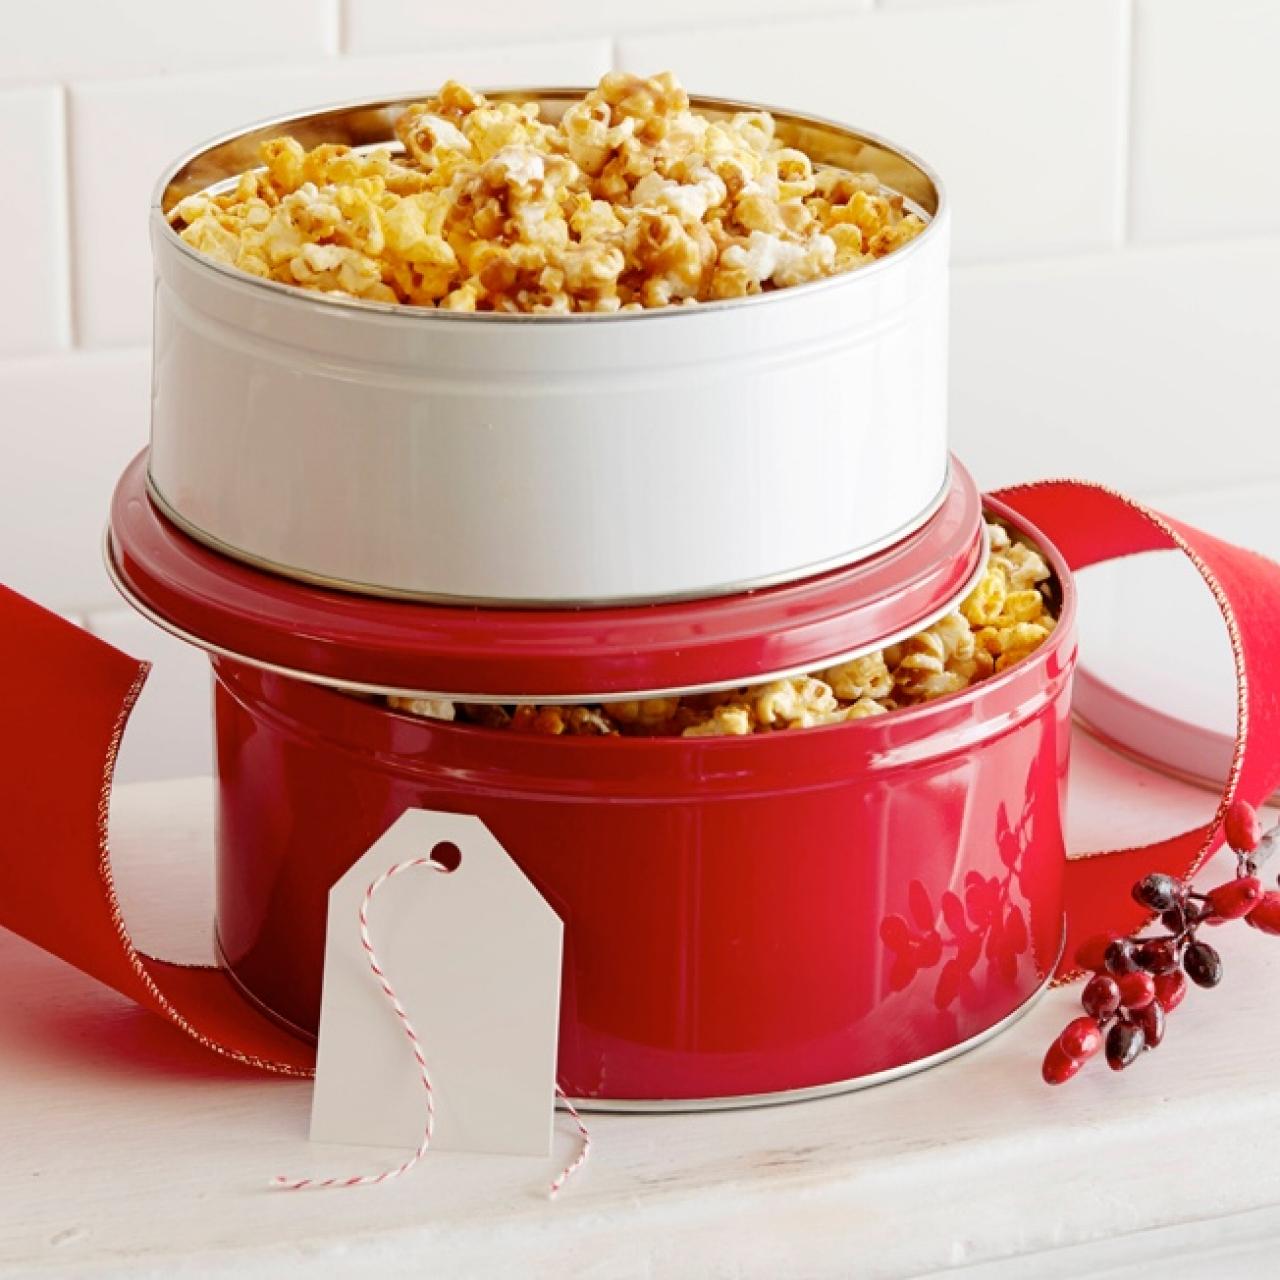 Microwave Popcorn Mix Gift Box